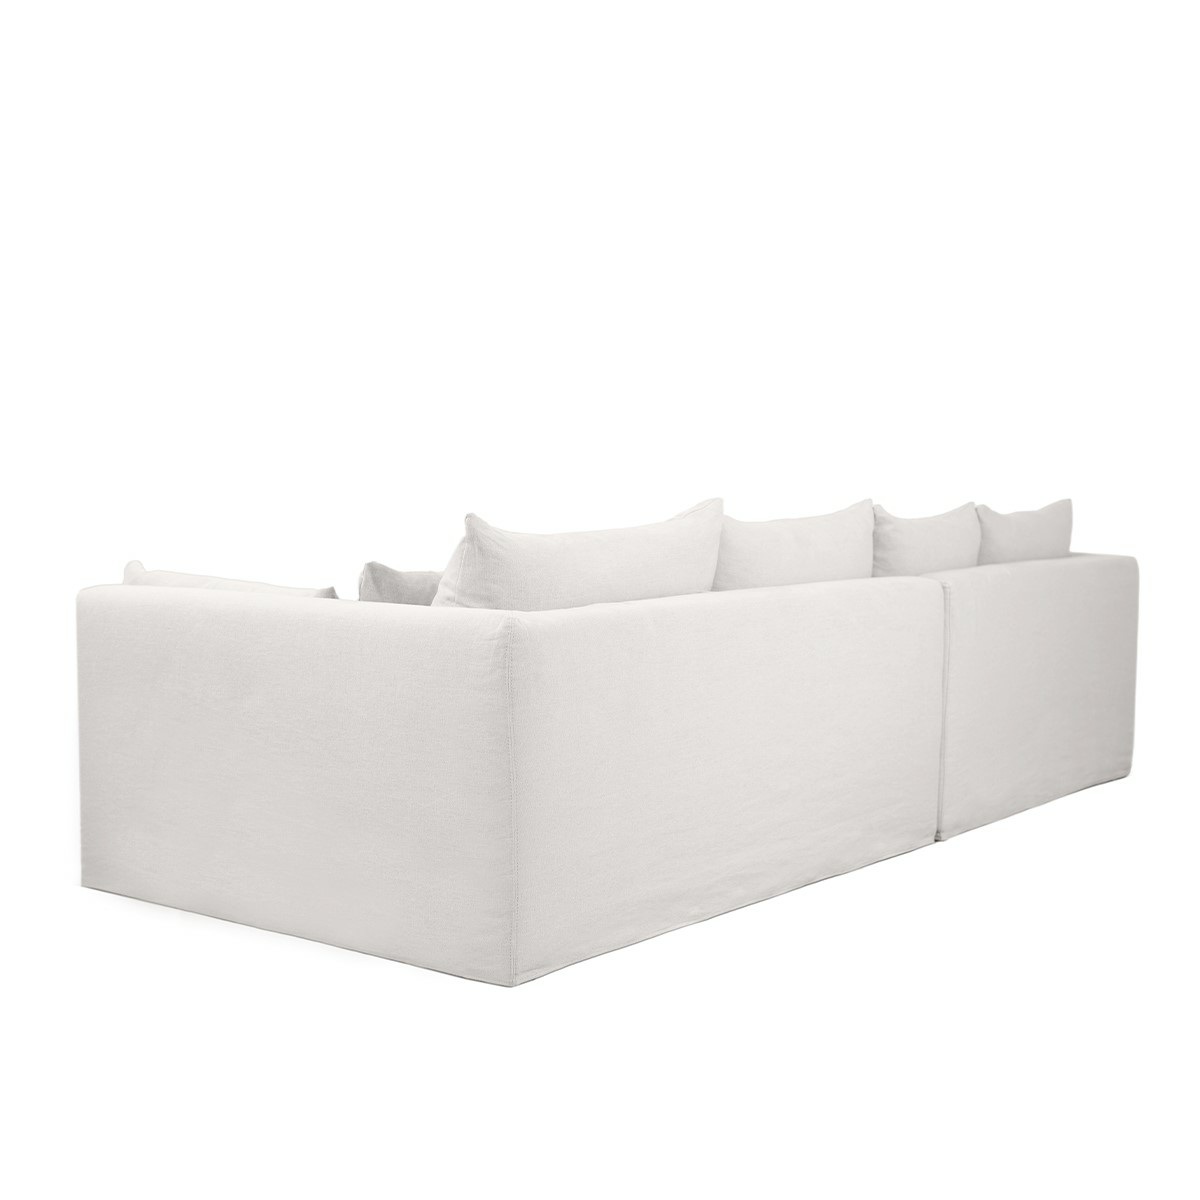 SuperBox corner sofa - Left angle, L300 x P180 x H85 cm - Linen - image 4